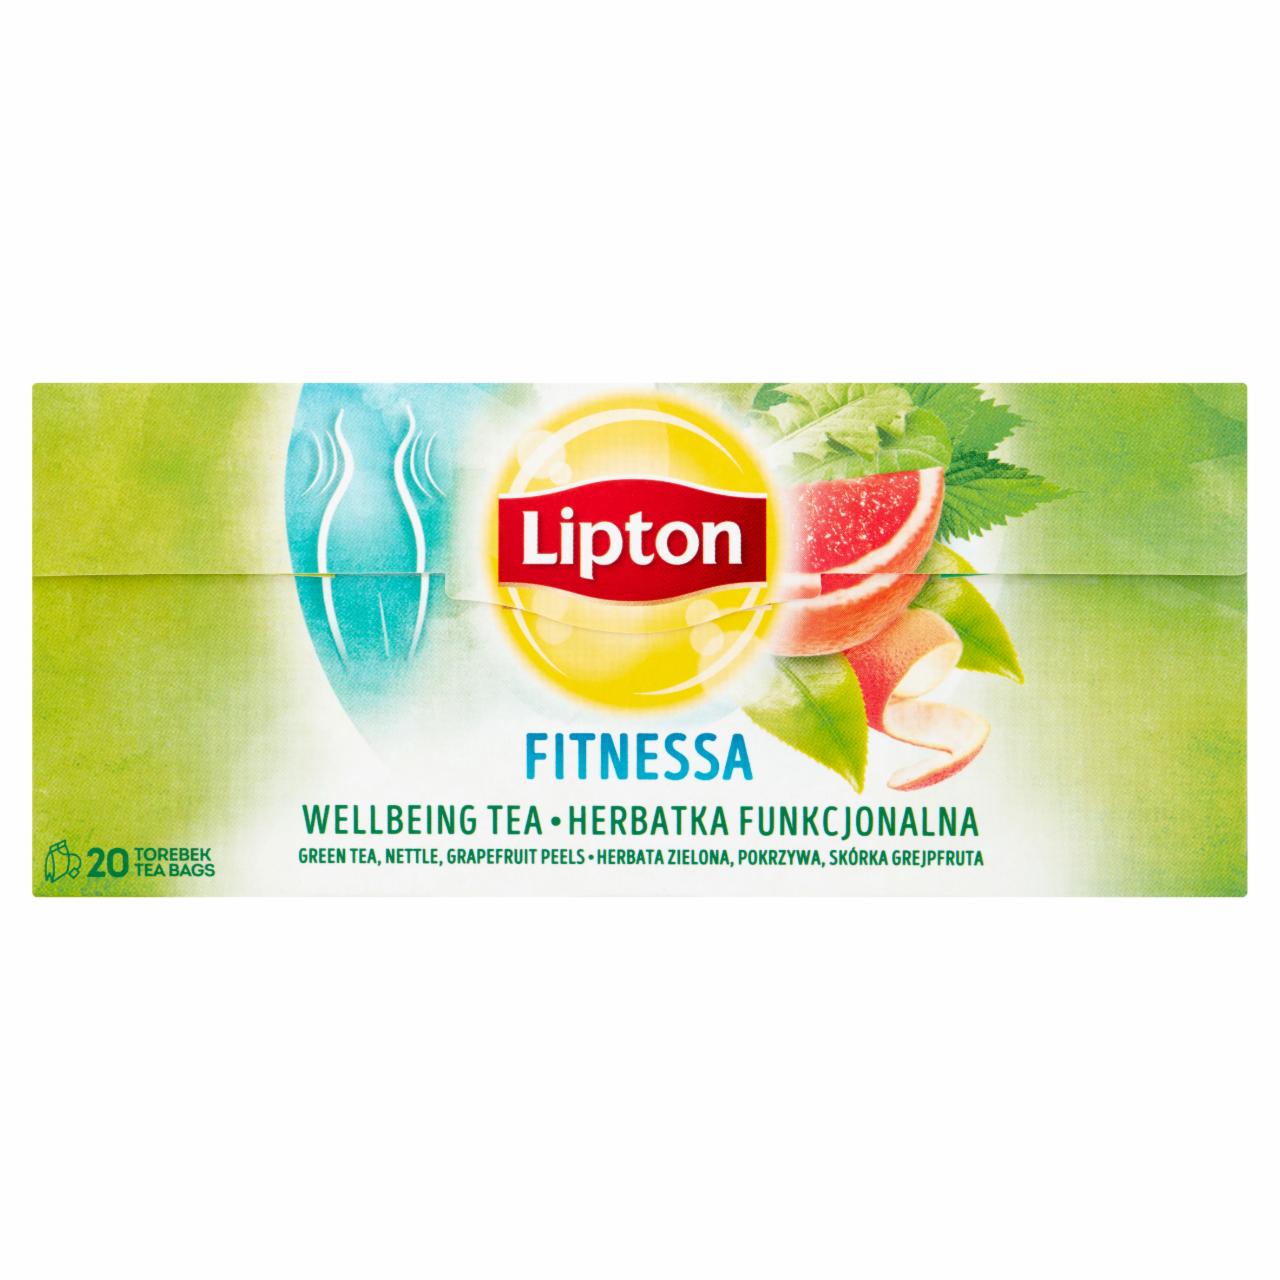 Zdjęcia - Lipton Fitnessa Herbatka funkcjonalna 32 g (20 torebek)